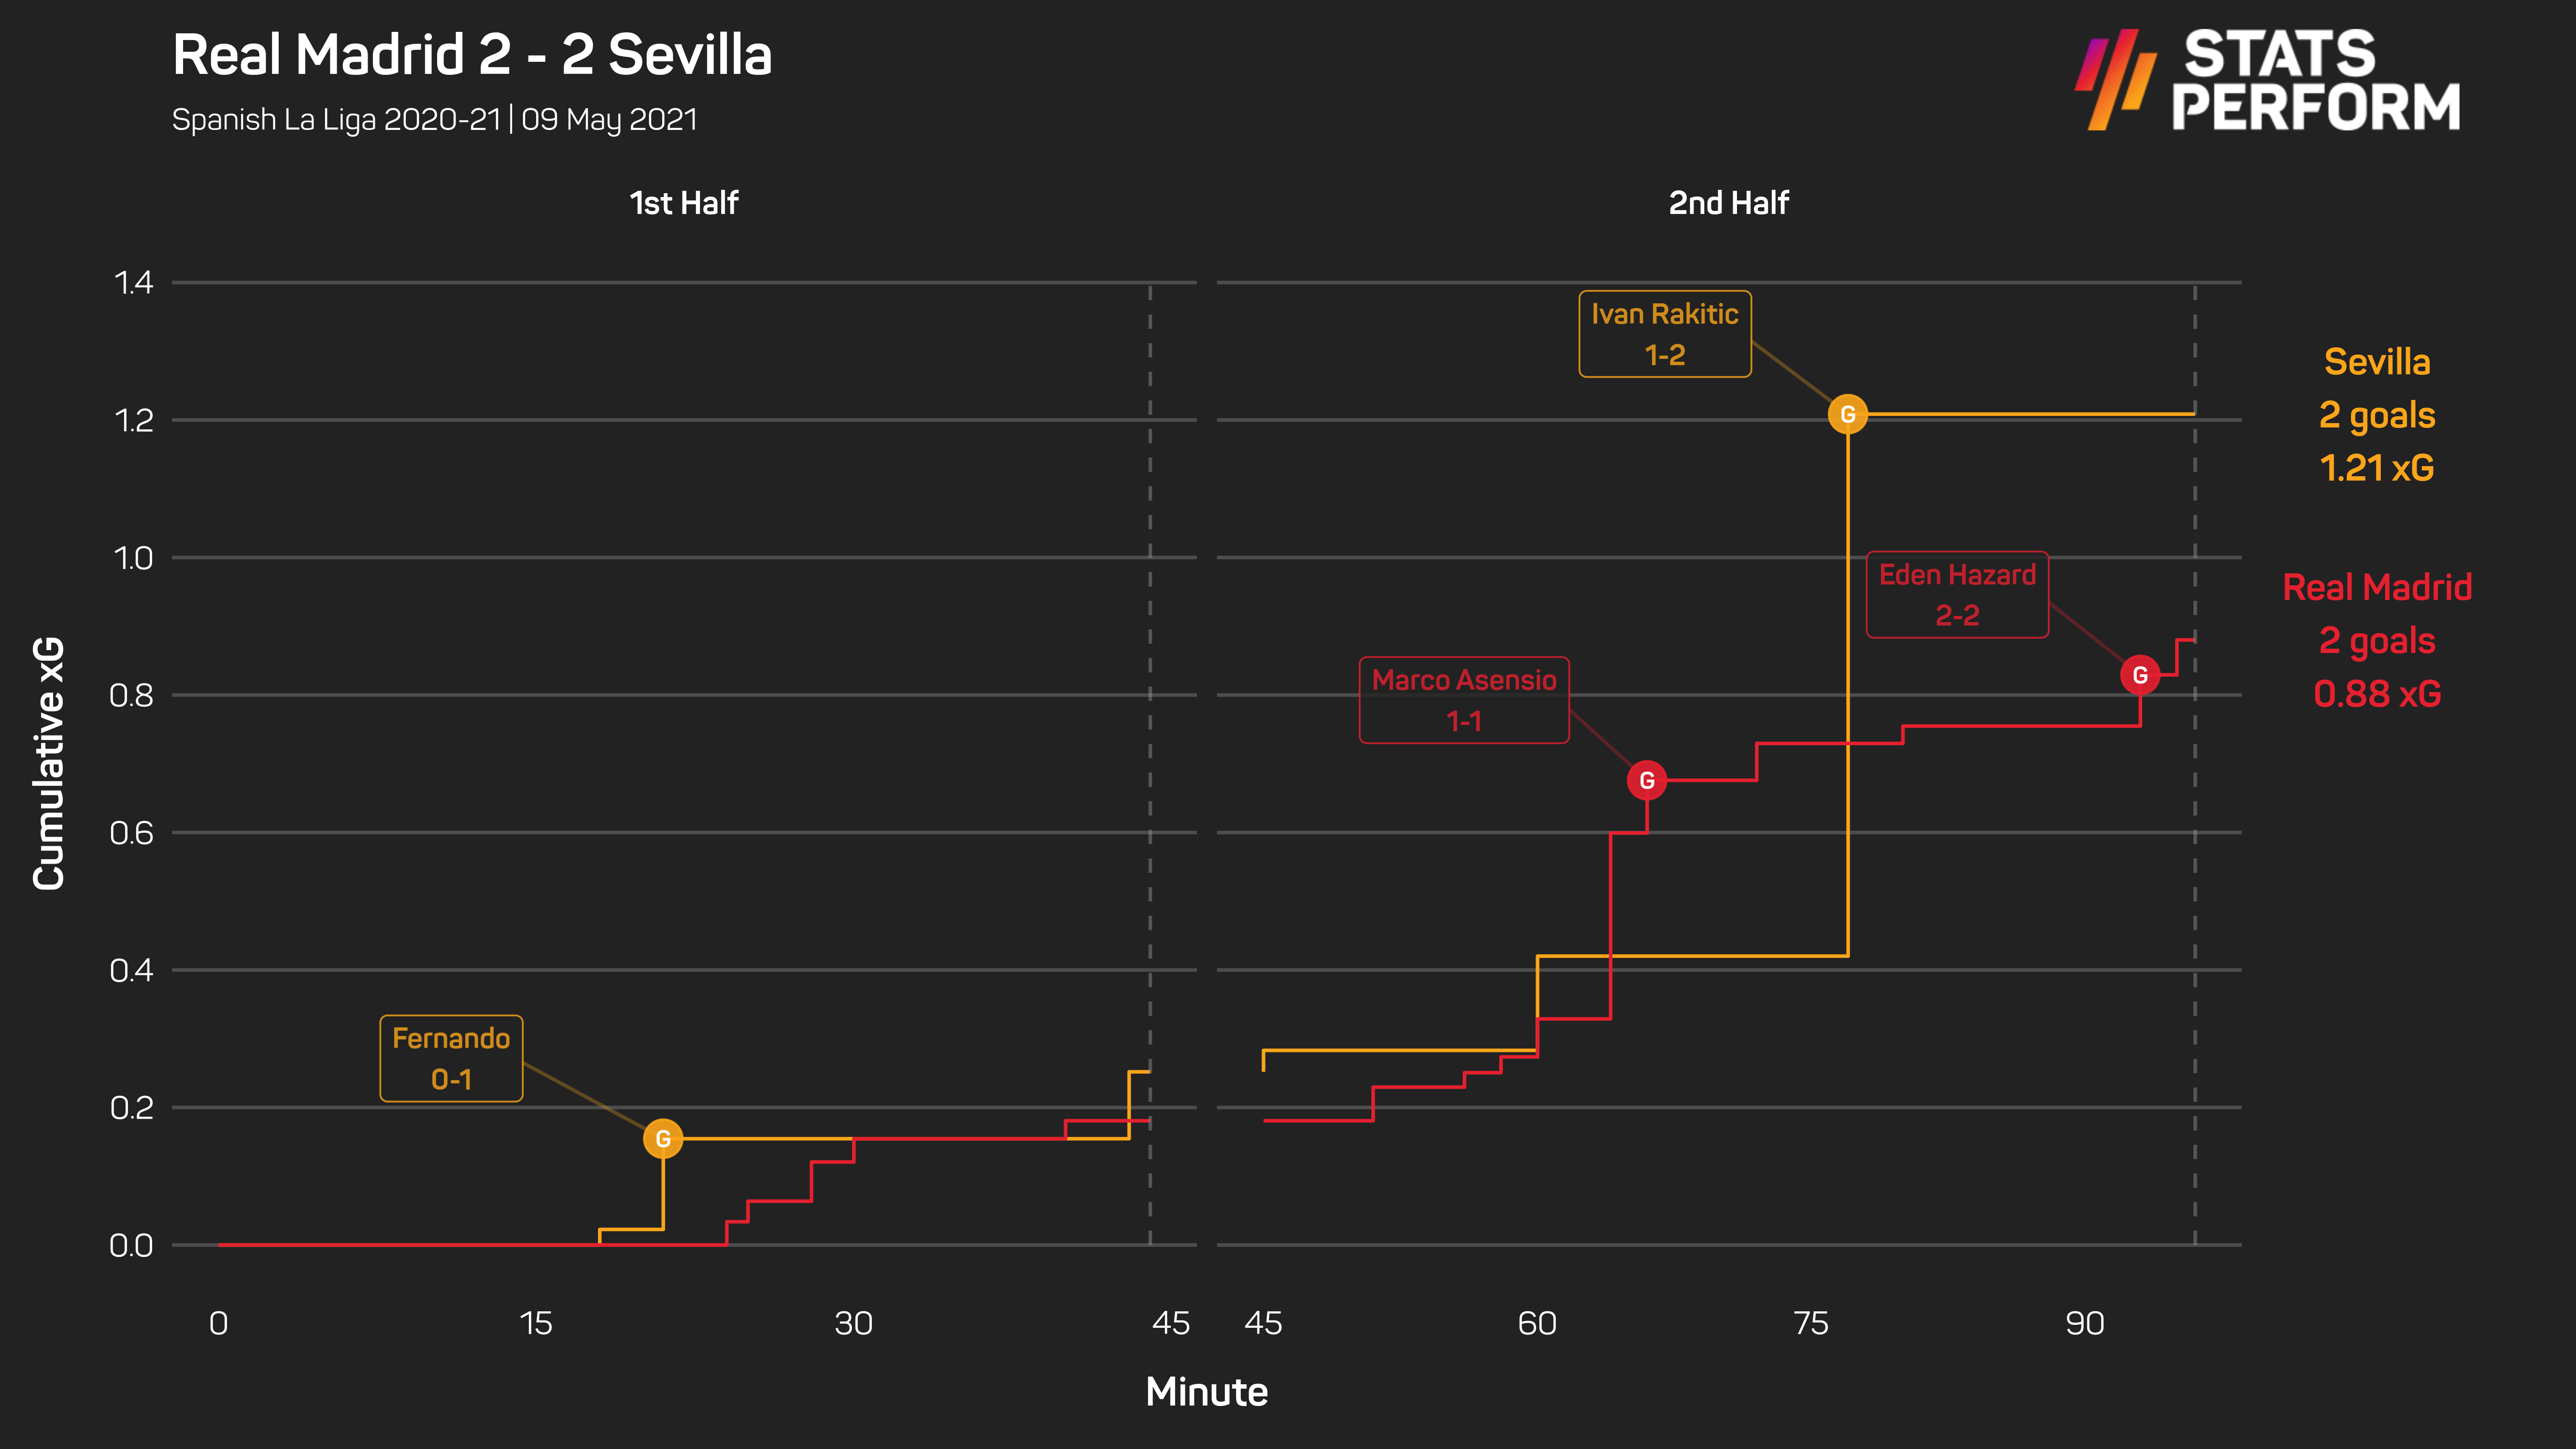 Real Madrid got a slice of fortune against Sevilla